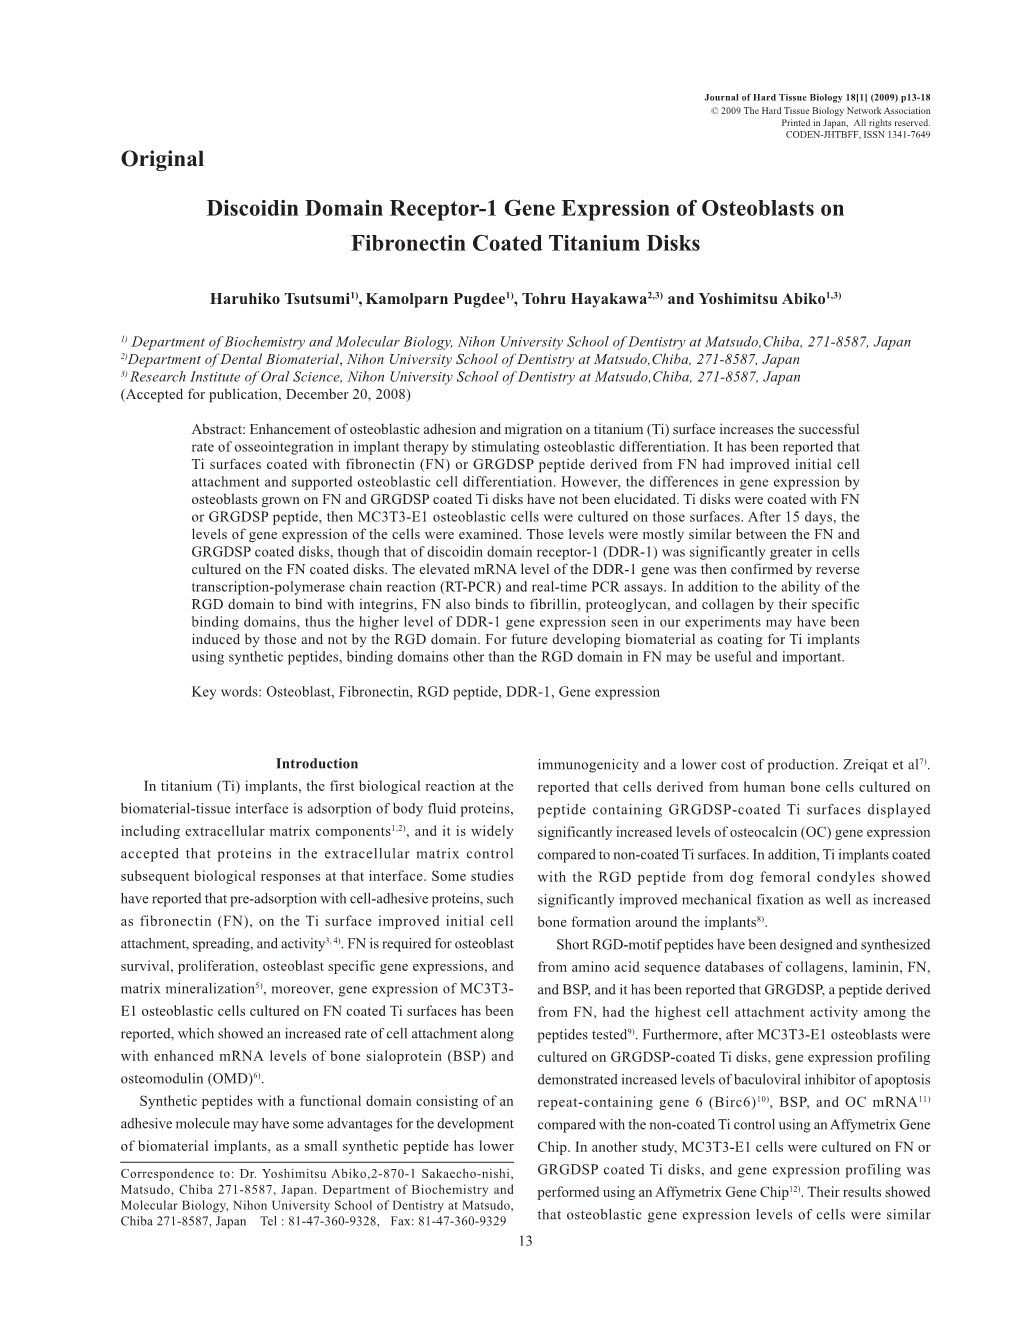 Discoidin Domain Receptor-1 Gene Expression of Osteoblasts on Fibronectin Coated Titanium Disks